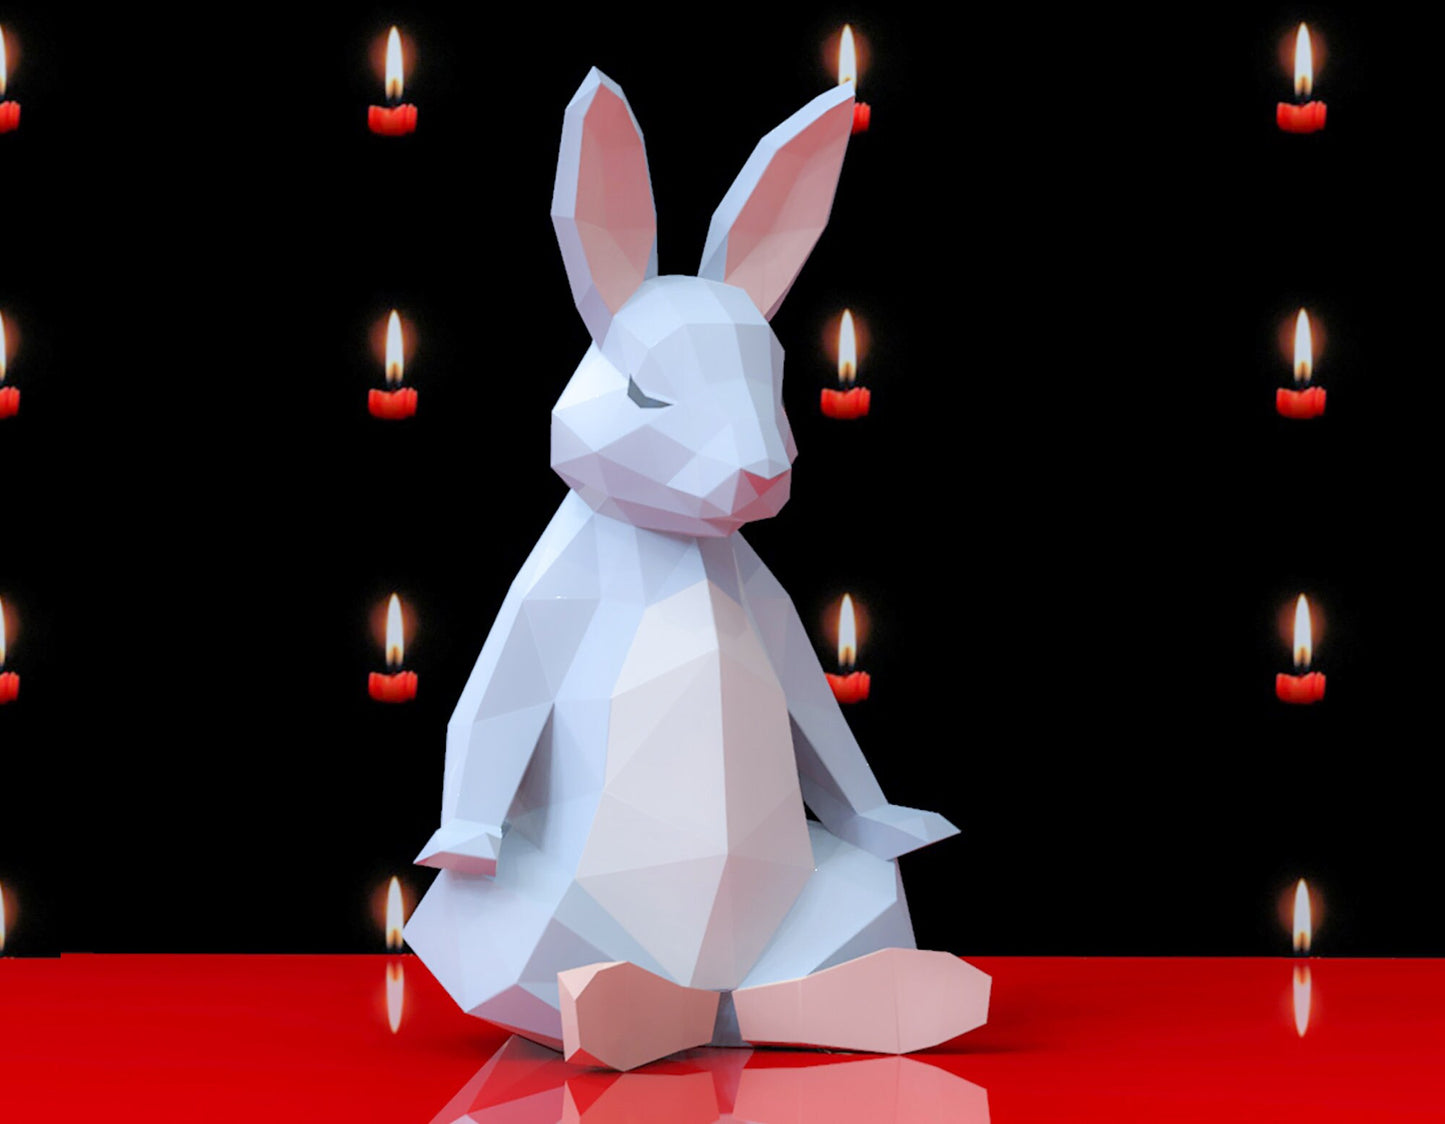 Rabbit meditation